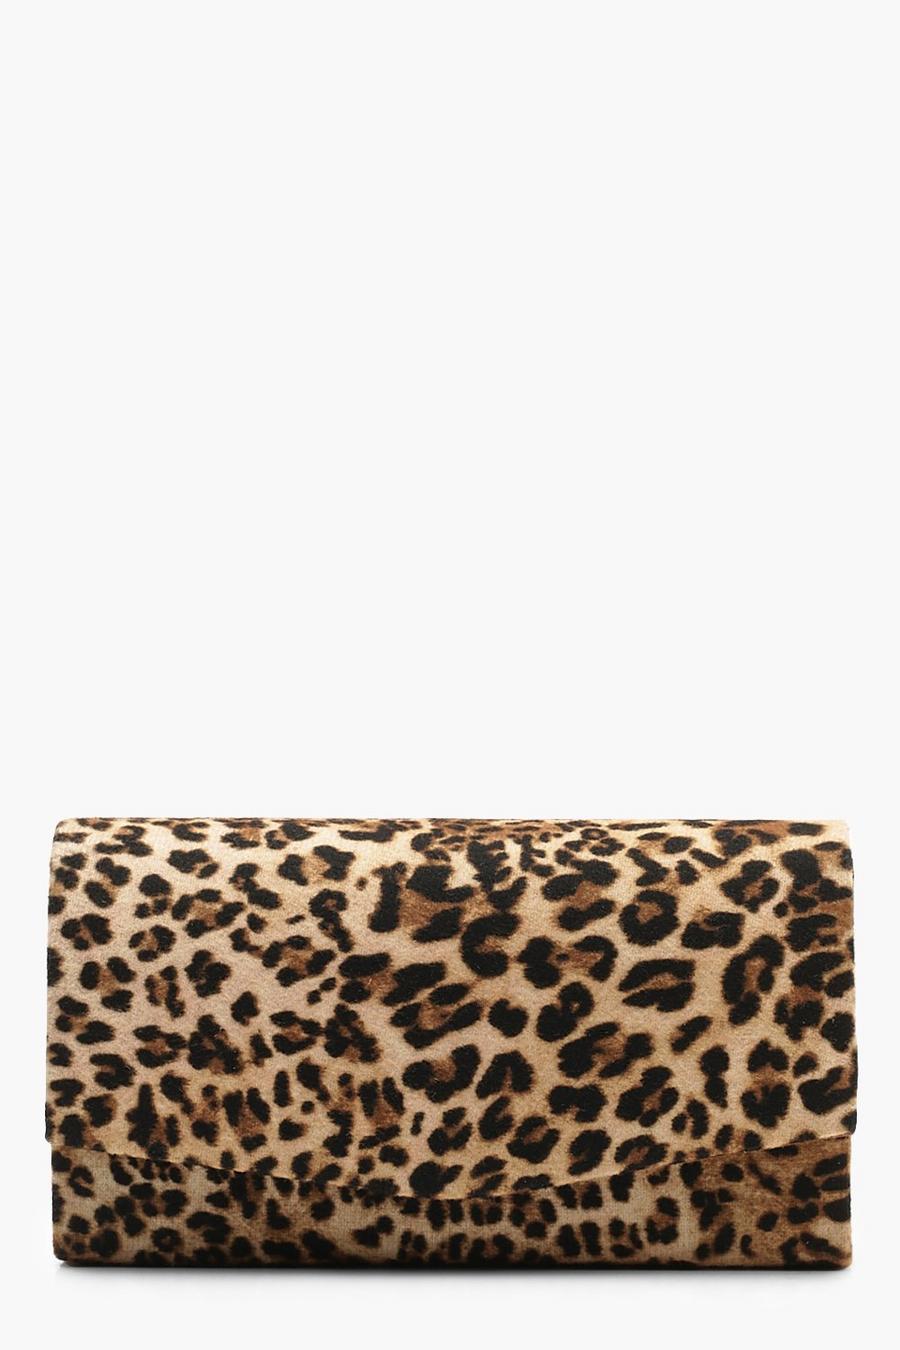 Natural beige Structured Leopard Envelope Clutch Bag & Chain